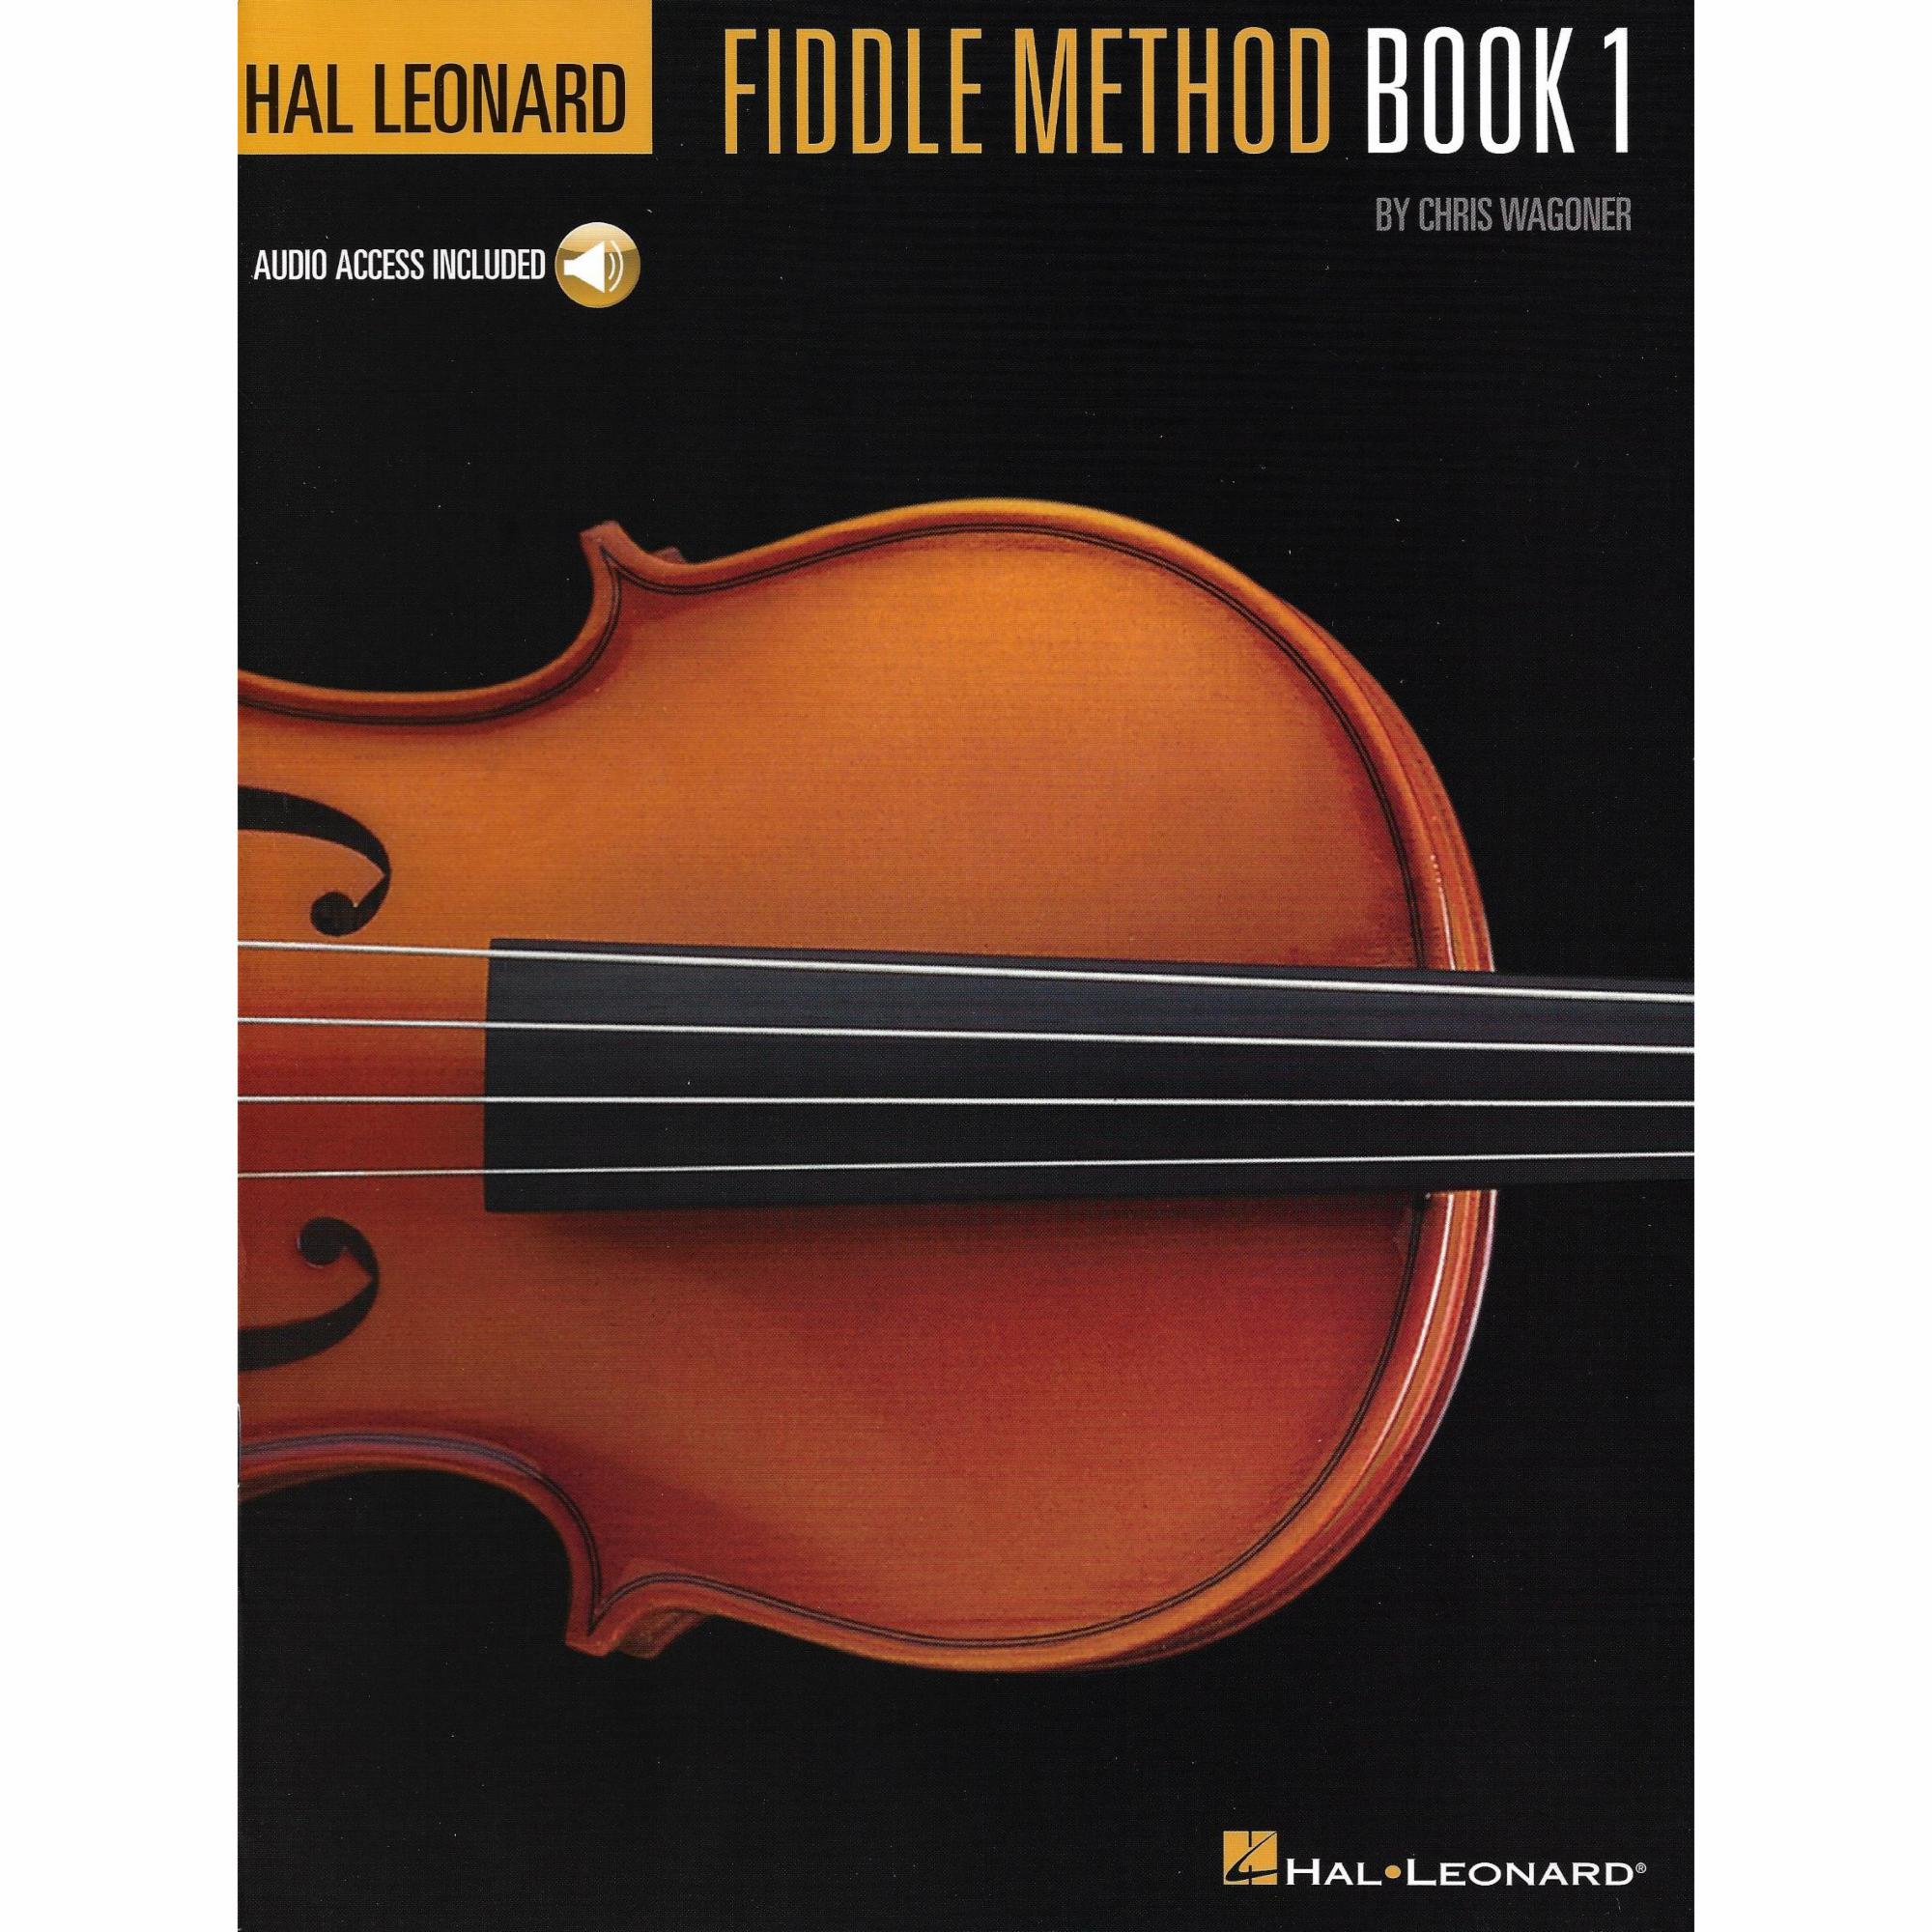 Fiddle Method